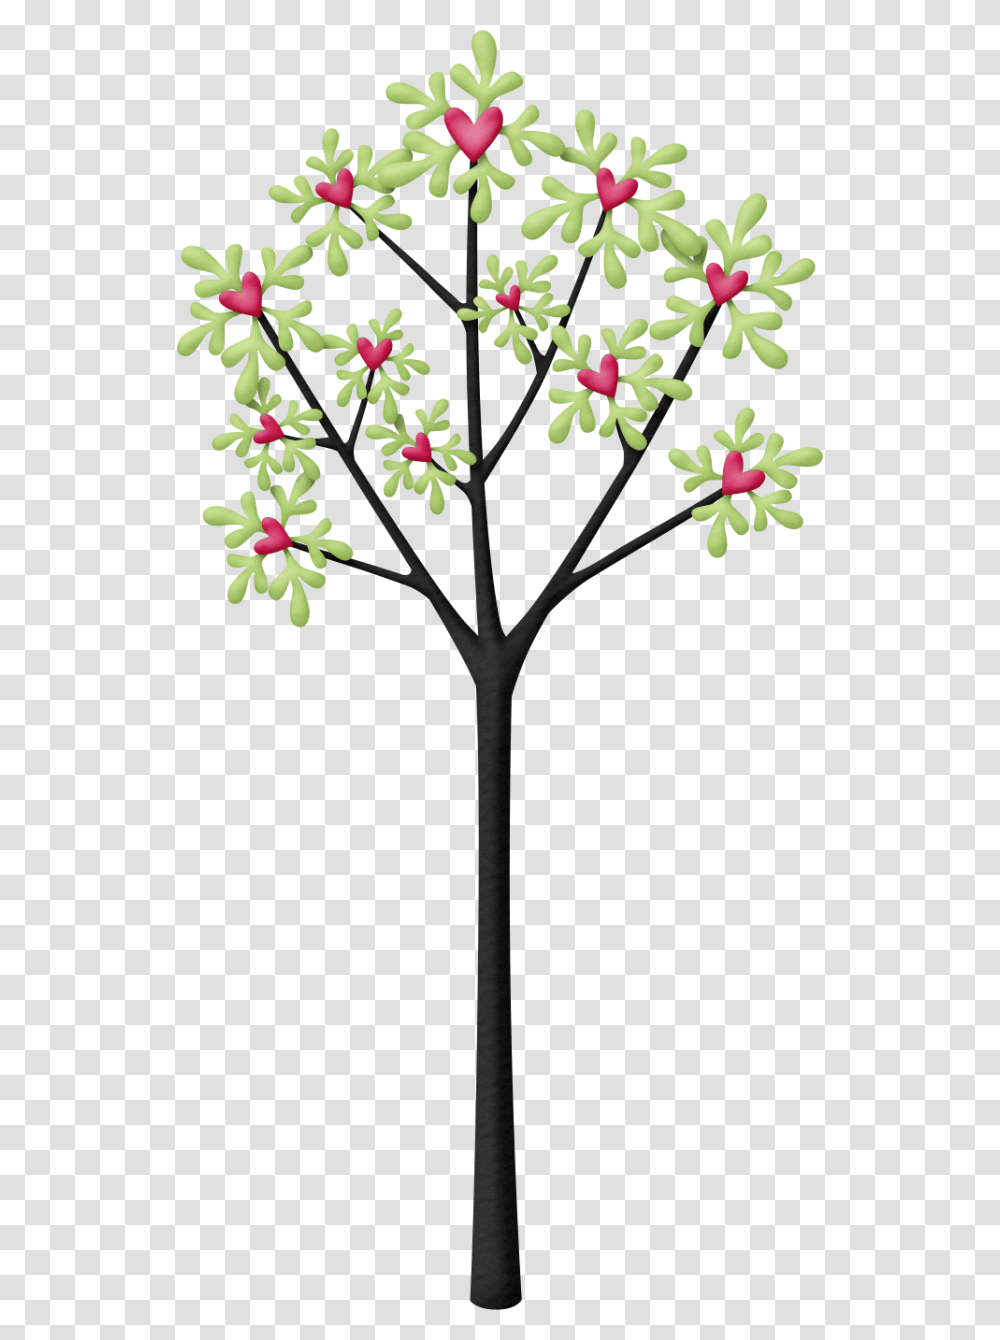 Tree Of Life Silhouette, Plant, Flower, Petal, Leaf Transparent Png